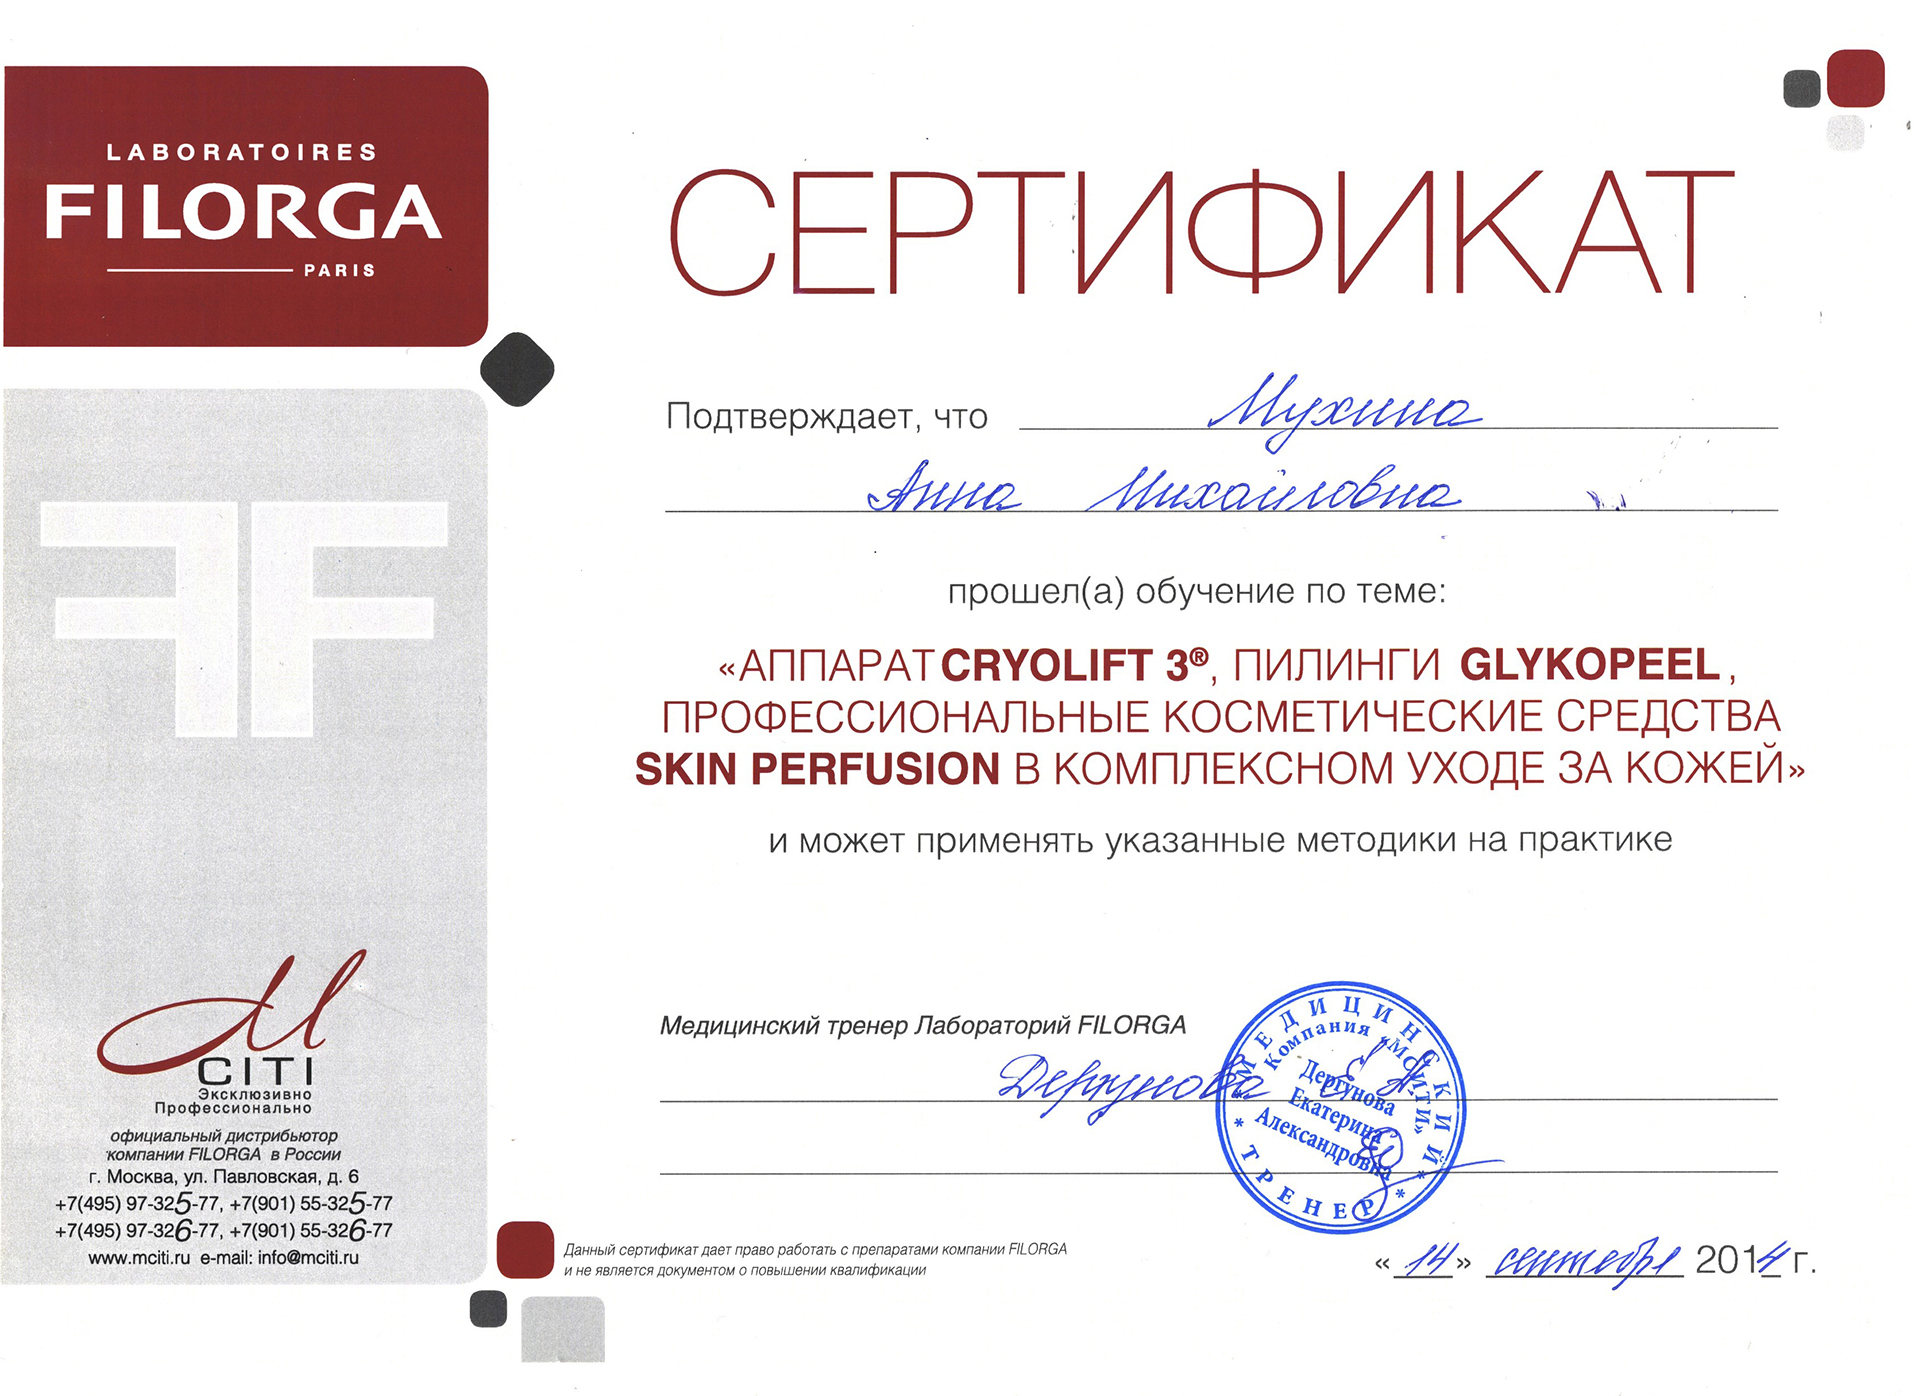 Сертификат — Обучение «Аппарат Cryolift 3, пилинги Glykopeel». Мухина Анна Михайловна